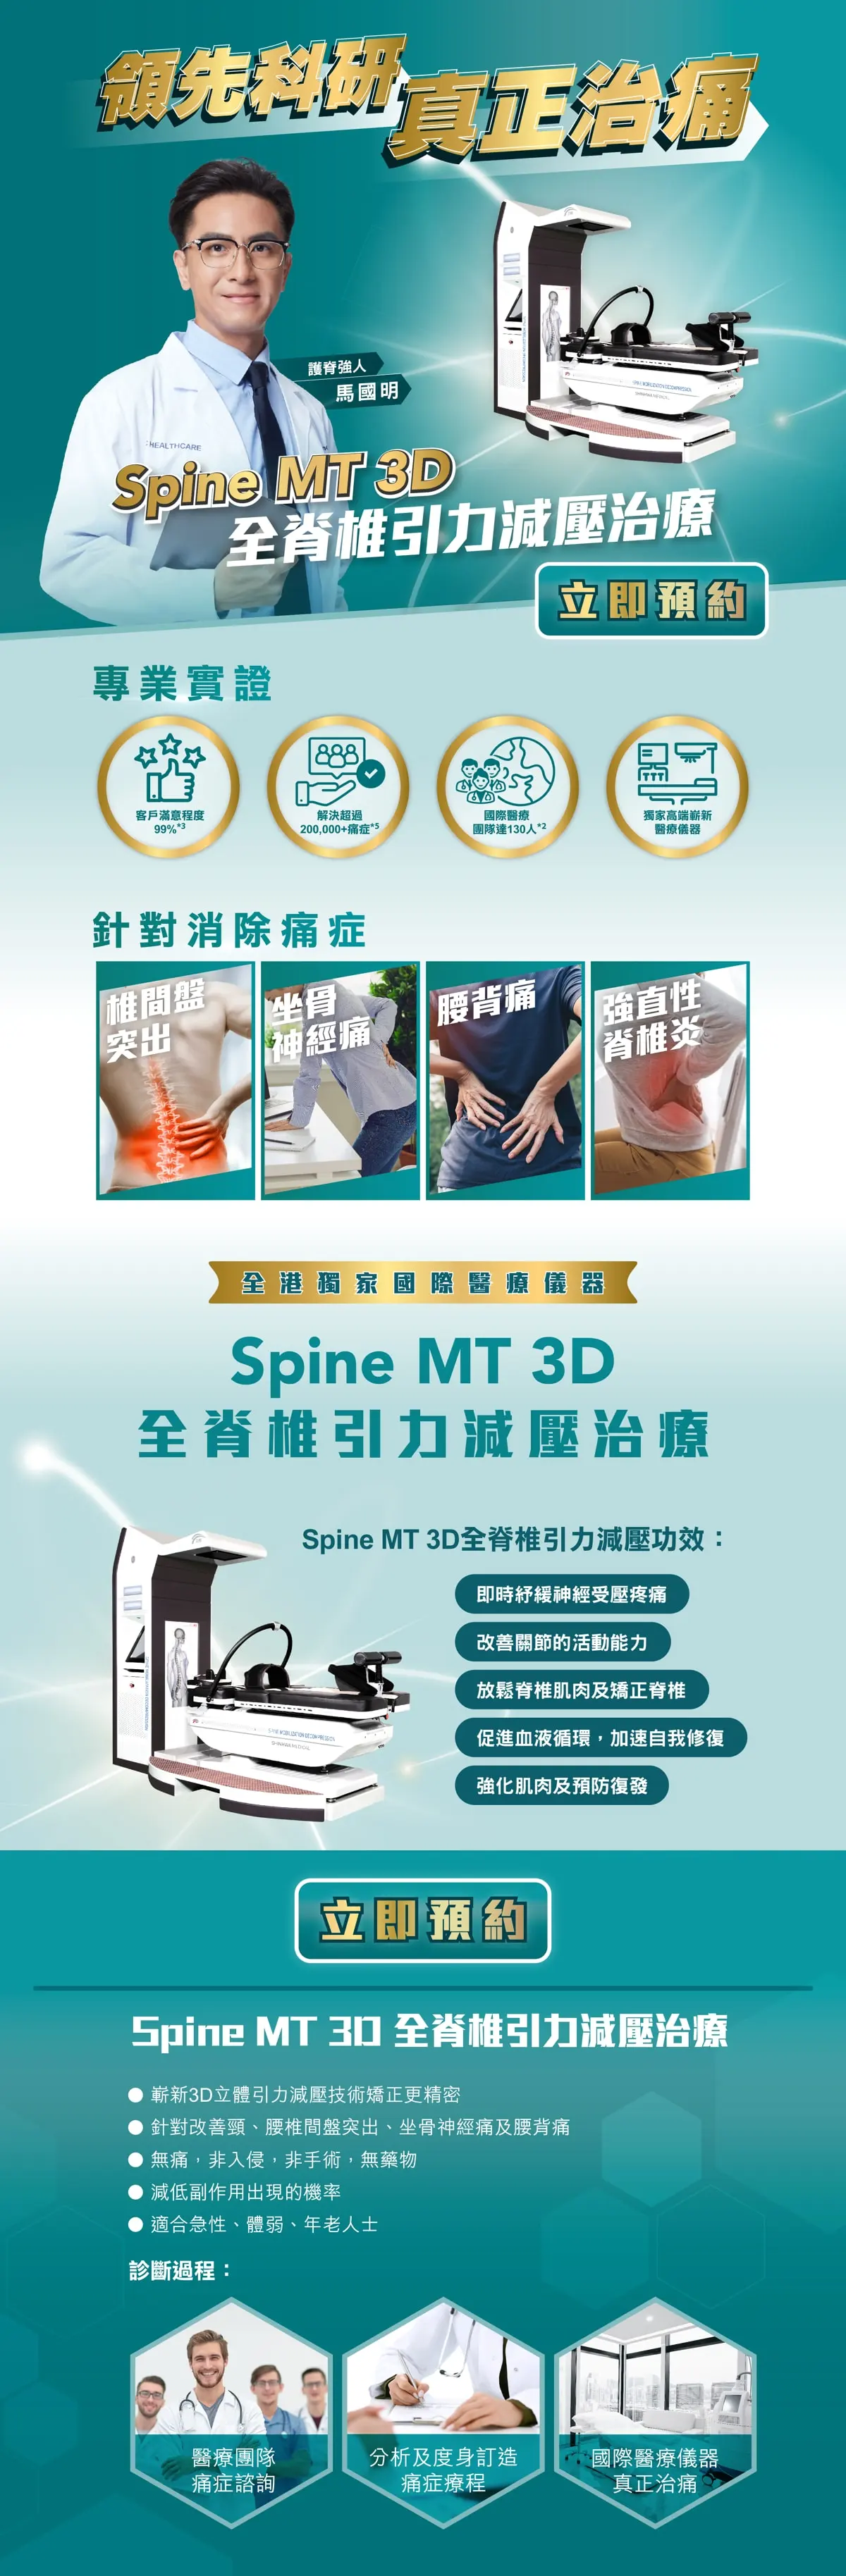 Spine MT 3D | 紐約脊骨及物理治療中心 | 熱線: (852) 6506 0189